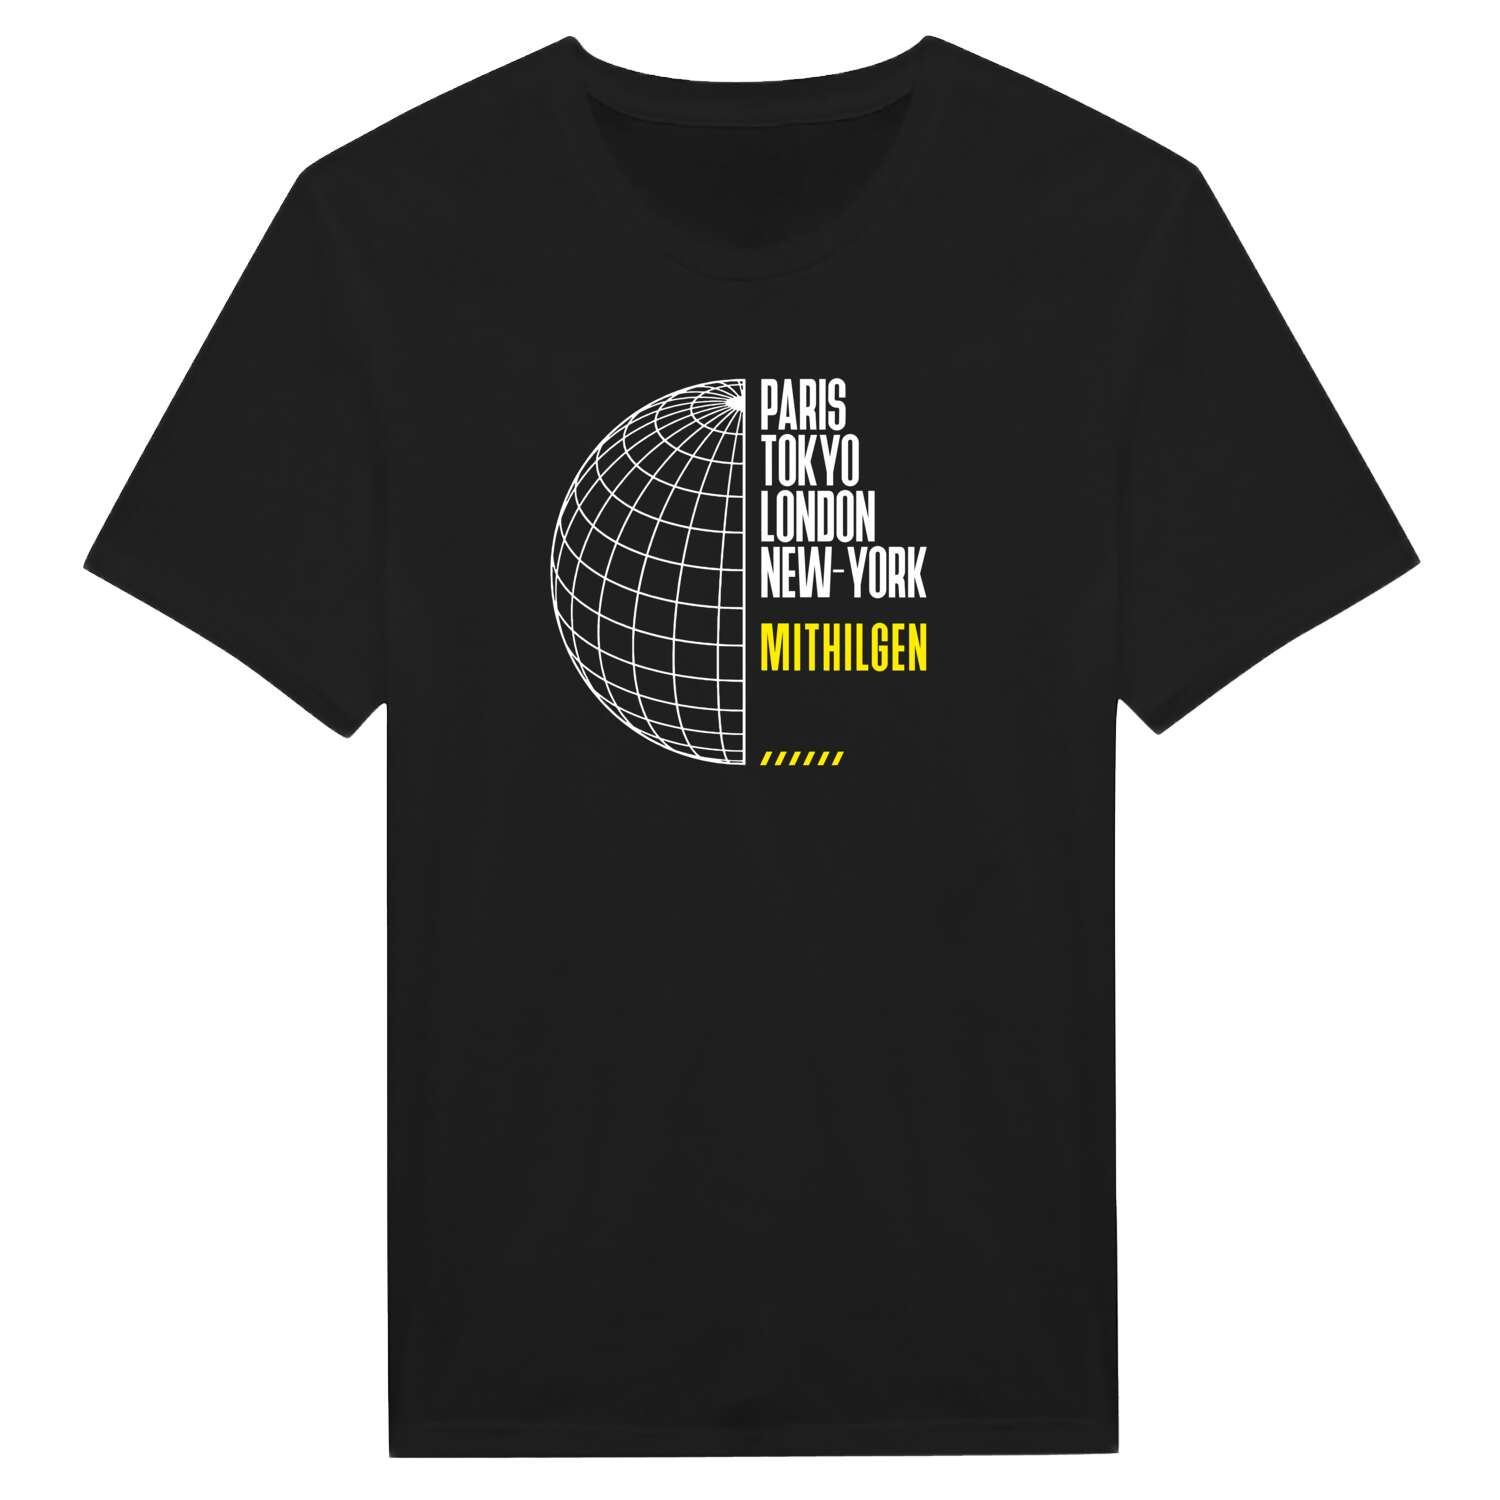 Mithilgen T-Shirt »Paris Tokyo London«